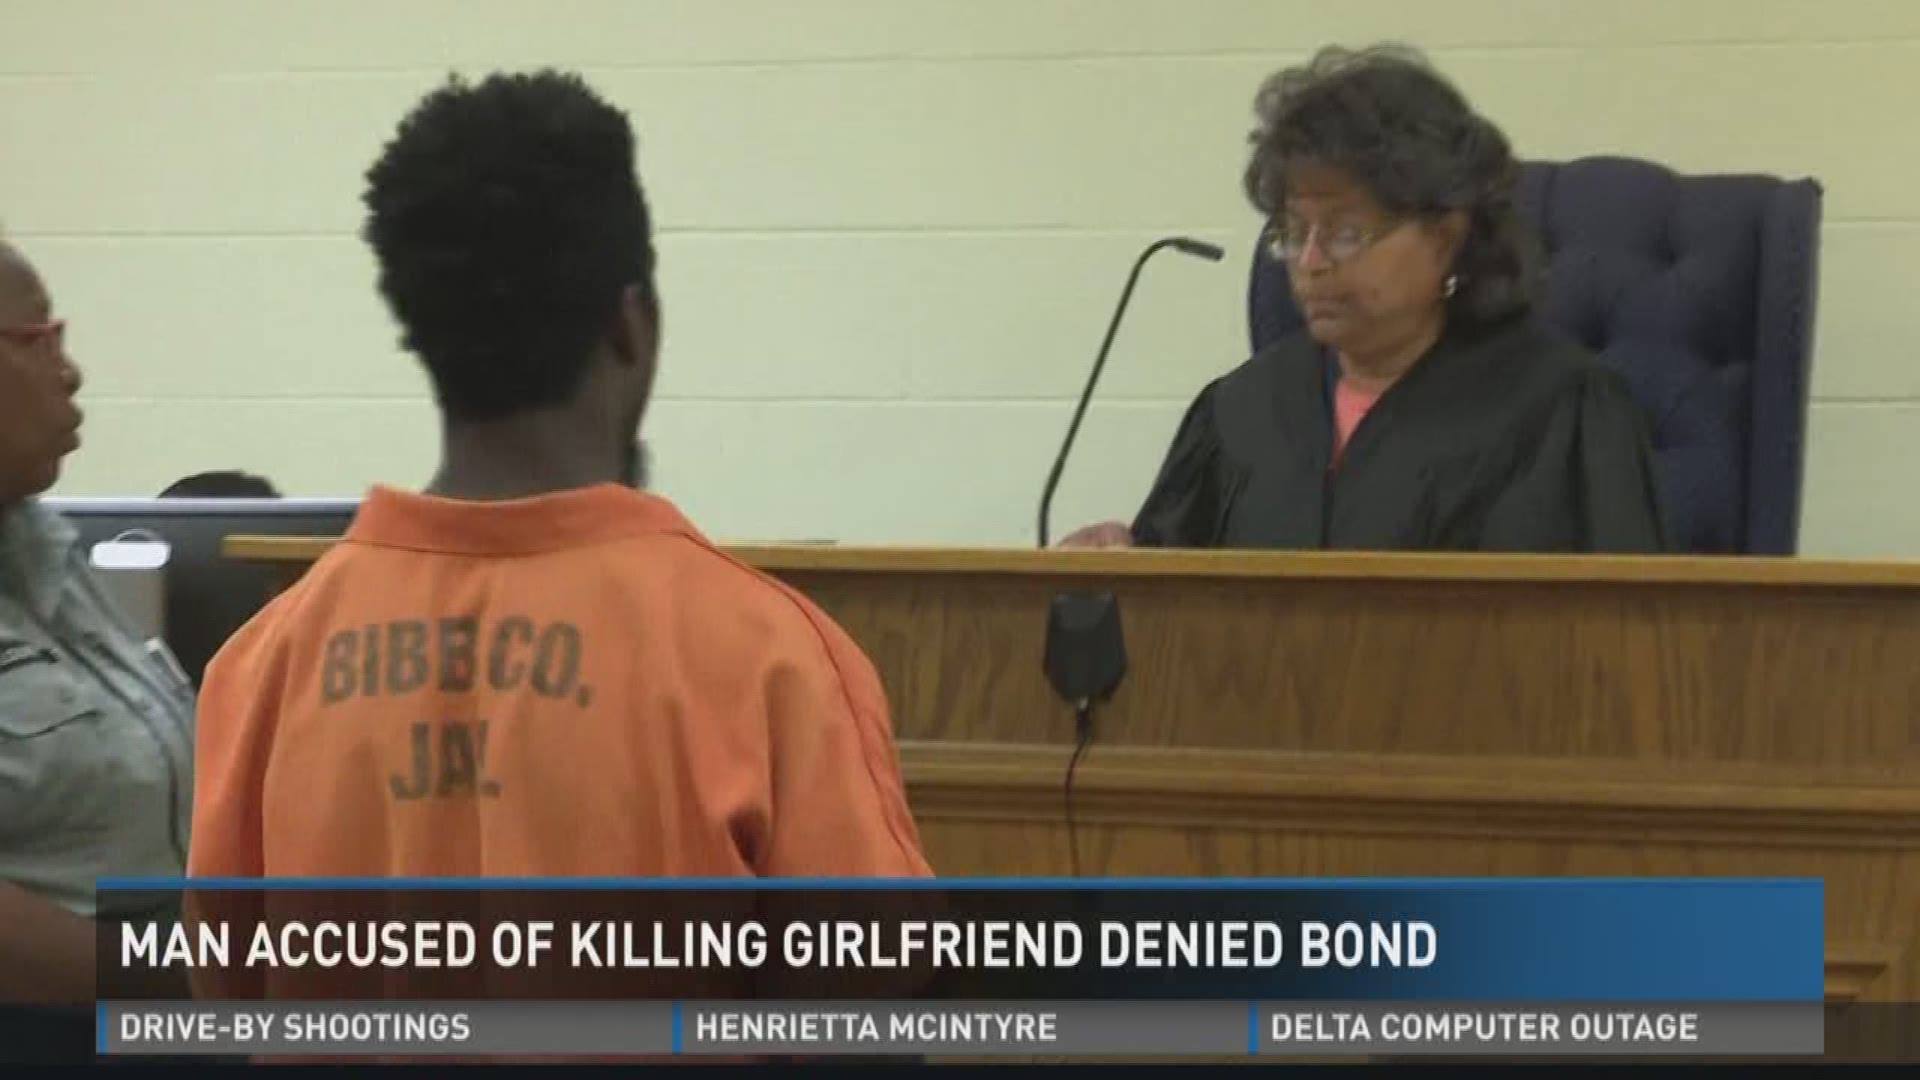 Man accused of killing girlfriend denied bond